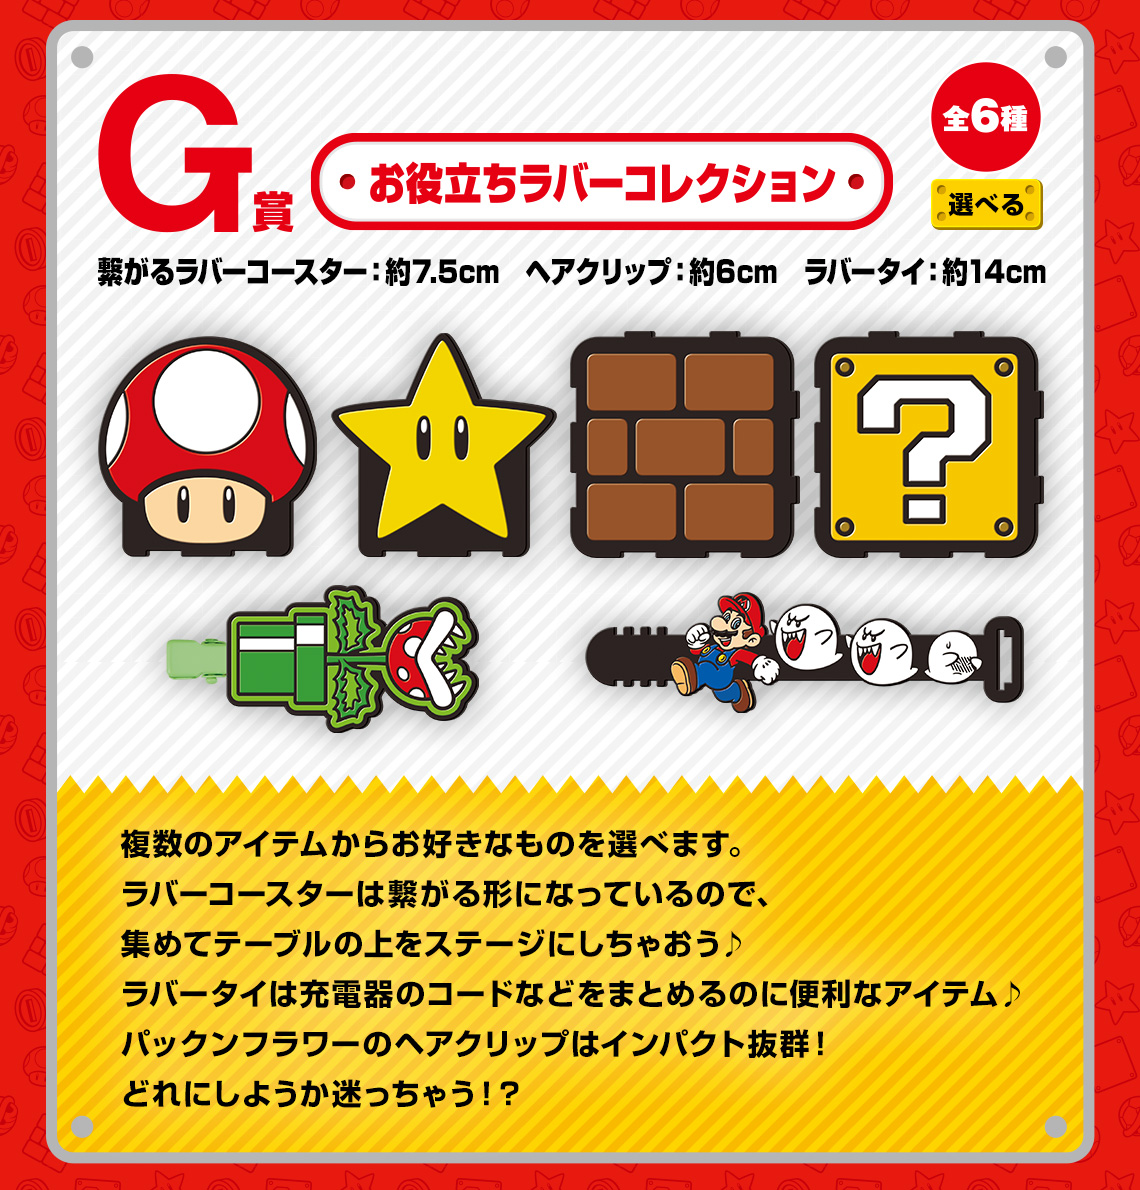 Ichiban KUJI Super Mario Bros. The Adventure Life in Your House Nintendo BANDAI